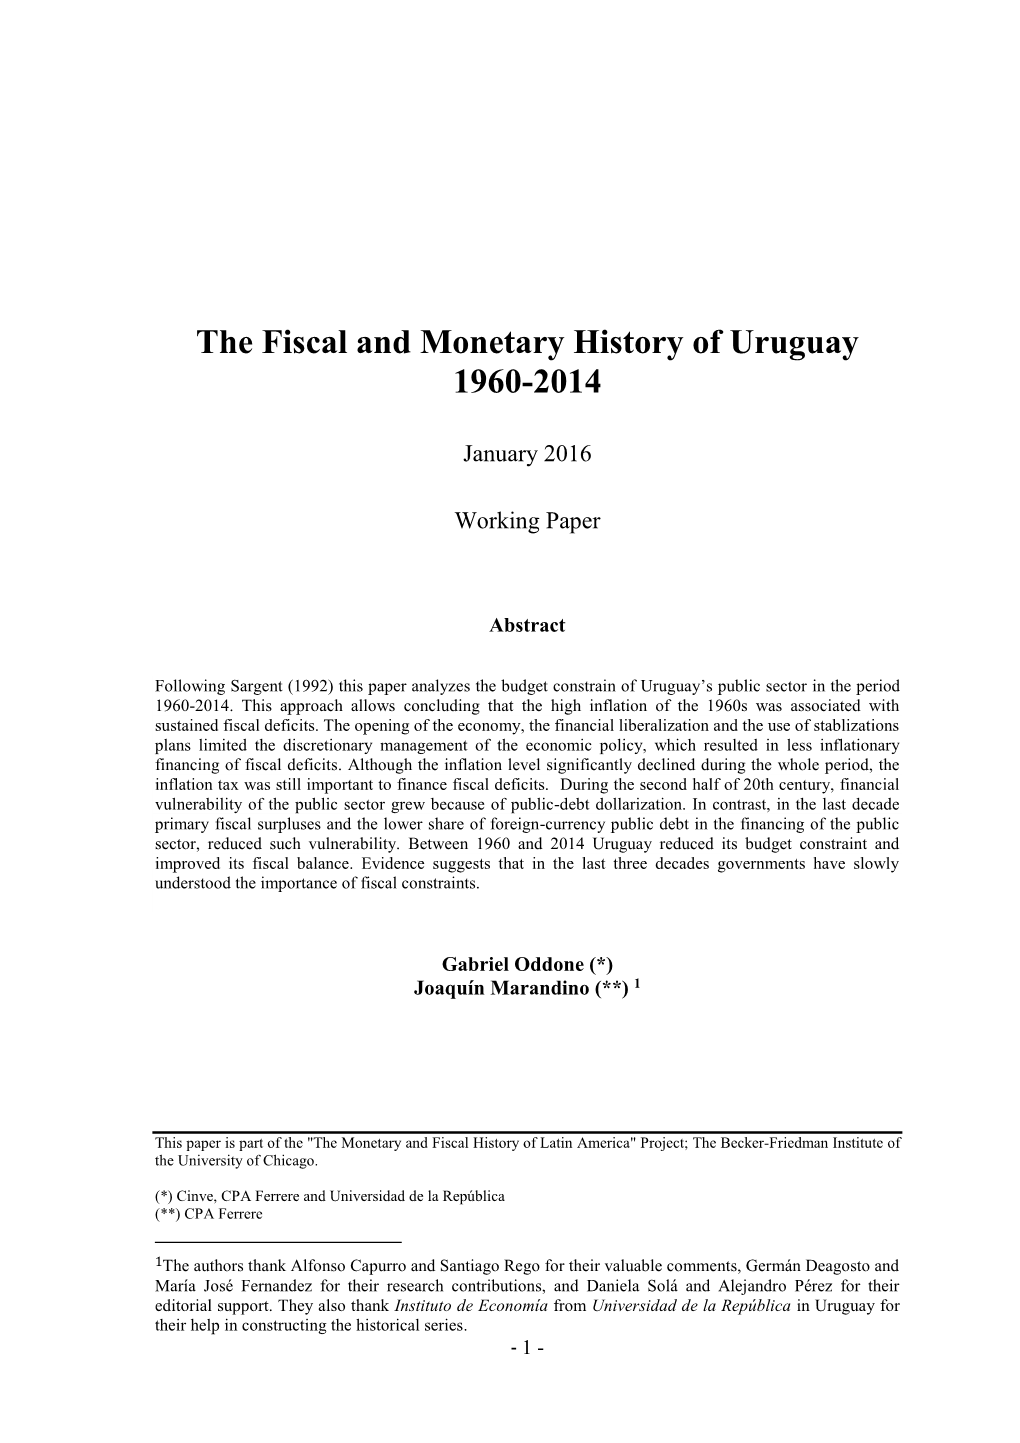 The Fiscal and Monetary History of Uruguay 1960-2014